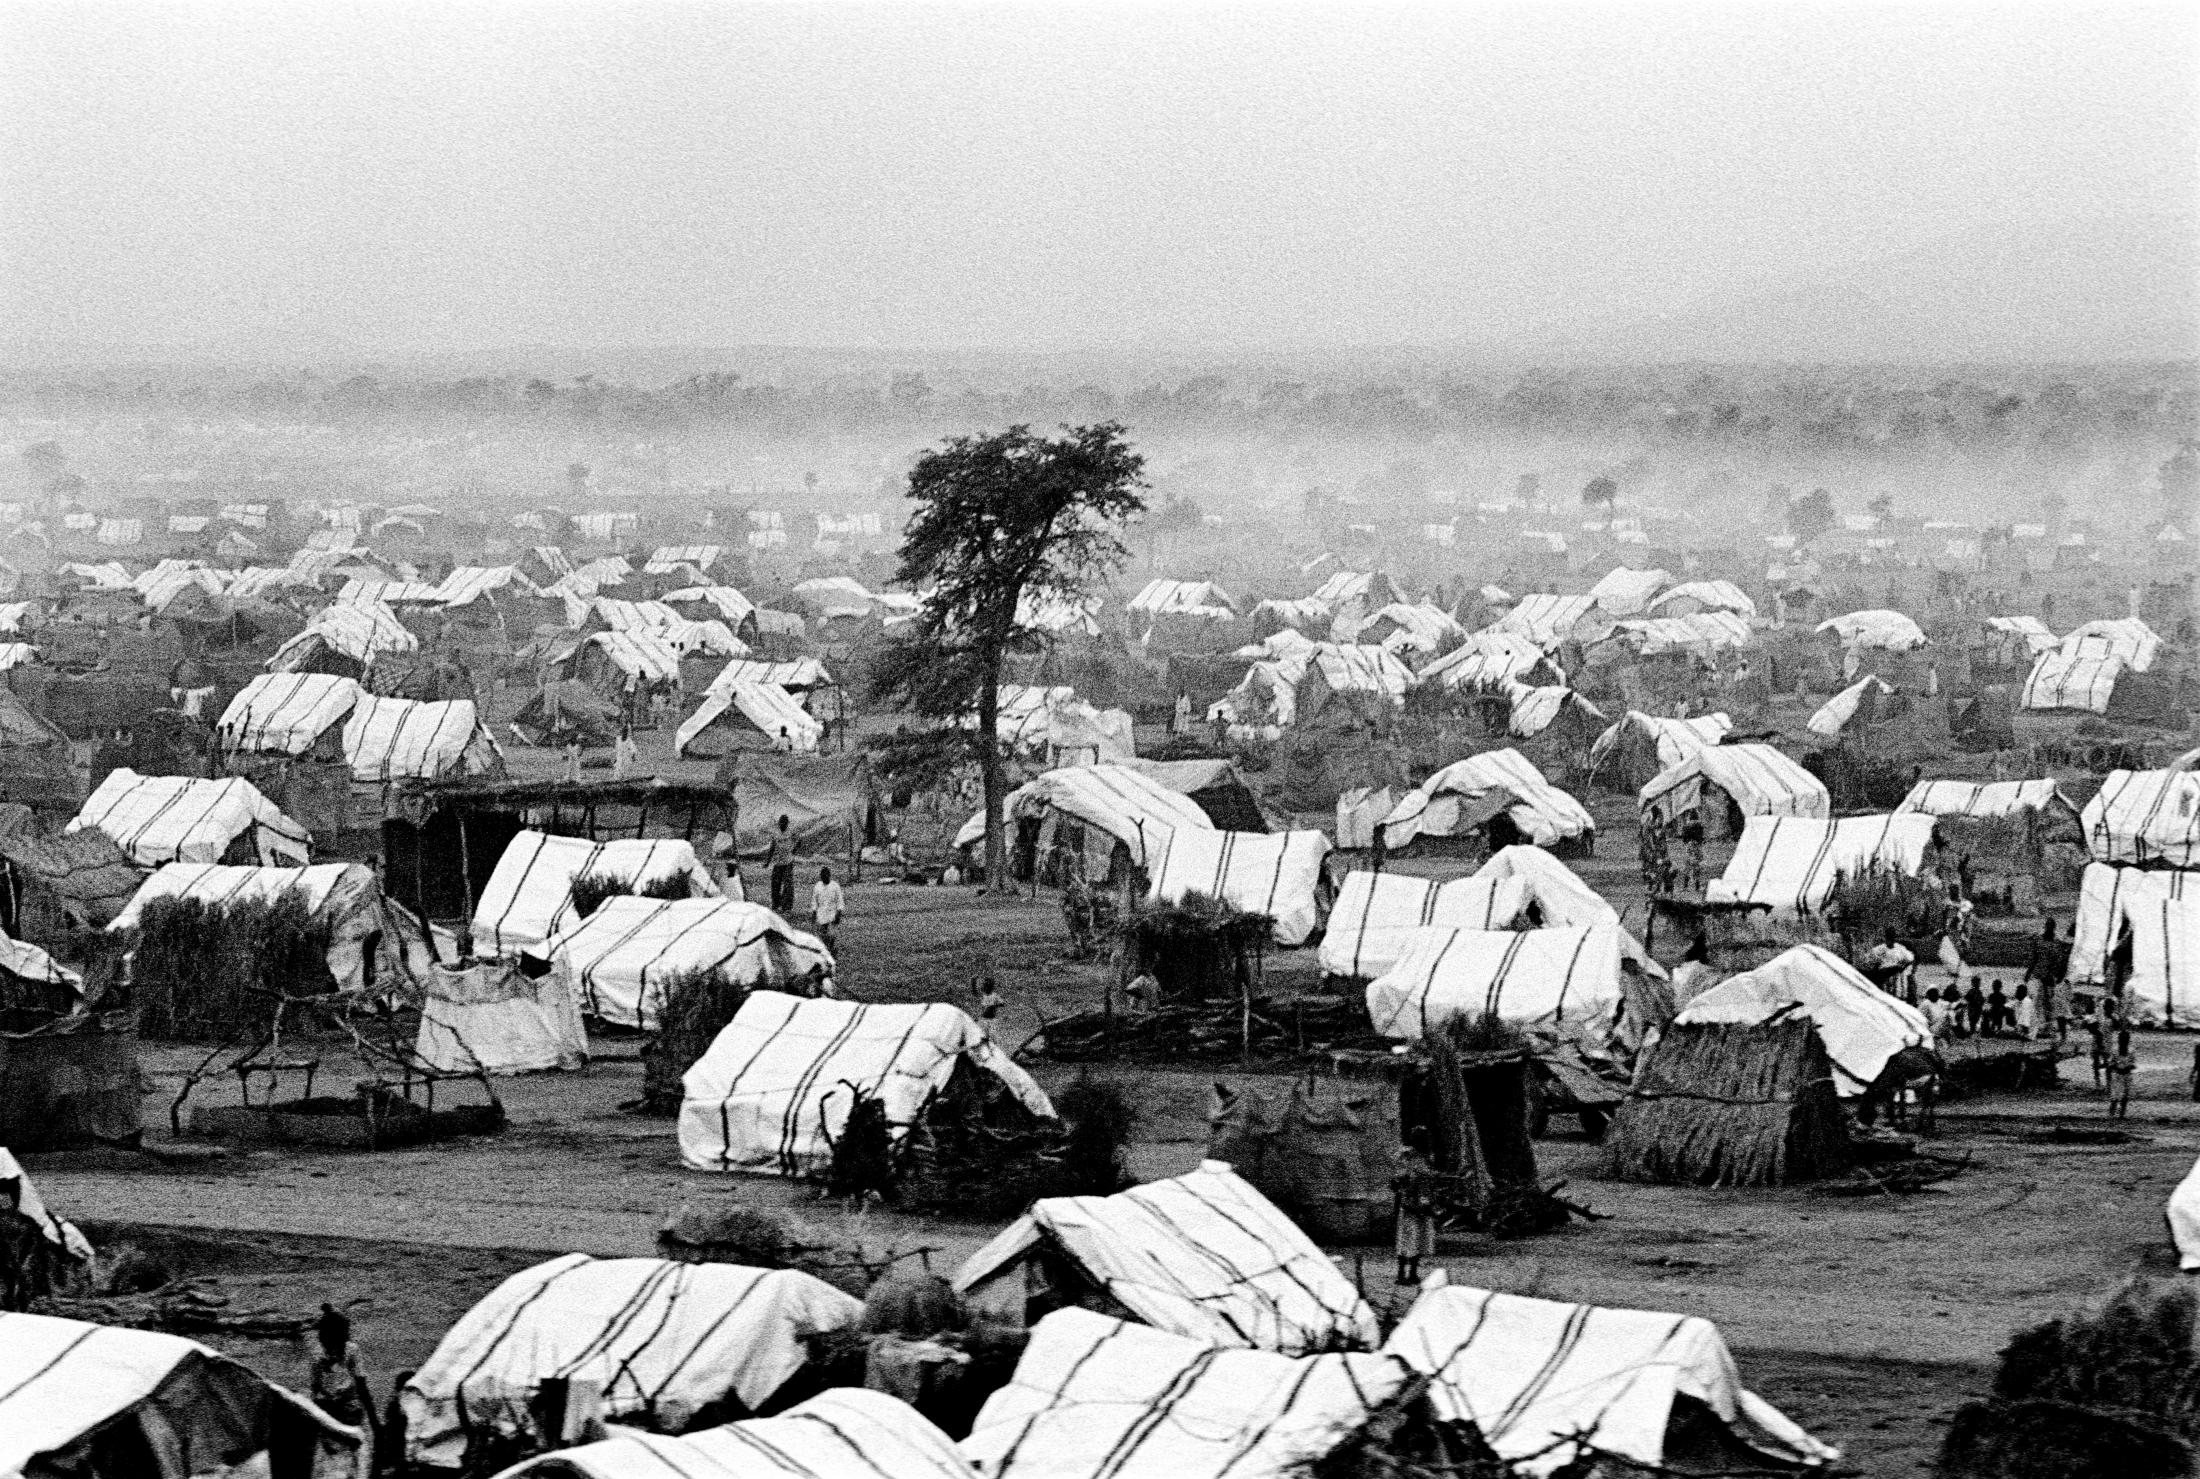 Darfur - SUDAN Zalingei, West Darfur Tents in the Zalingei camp...